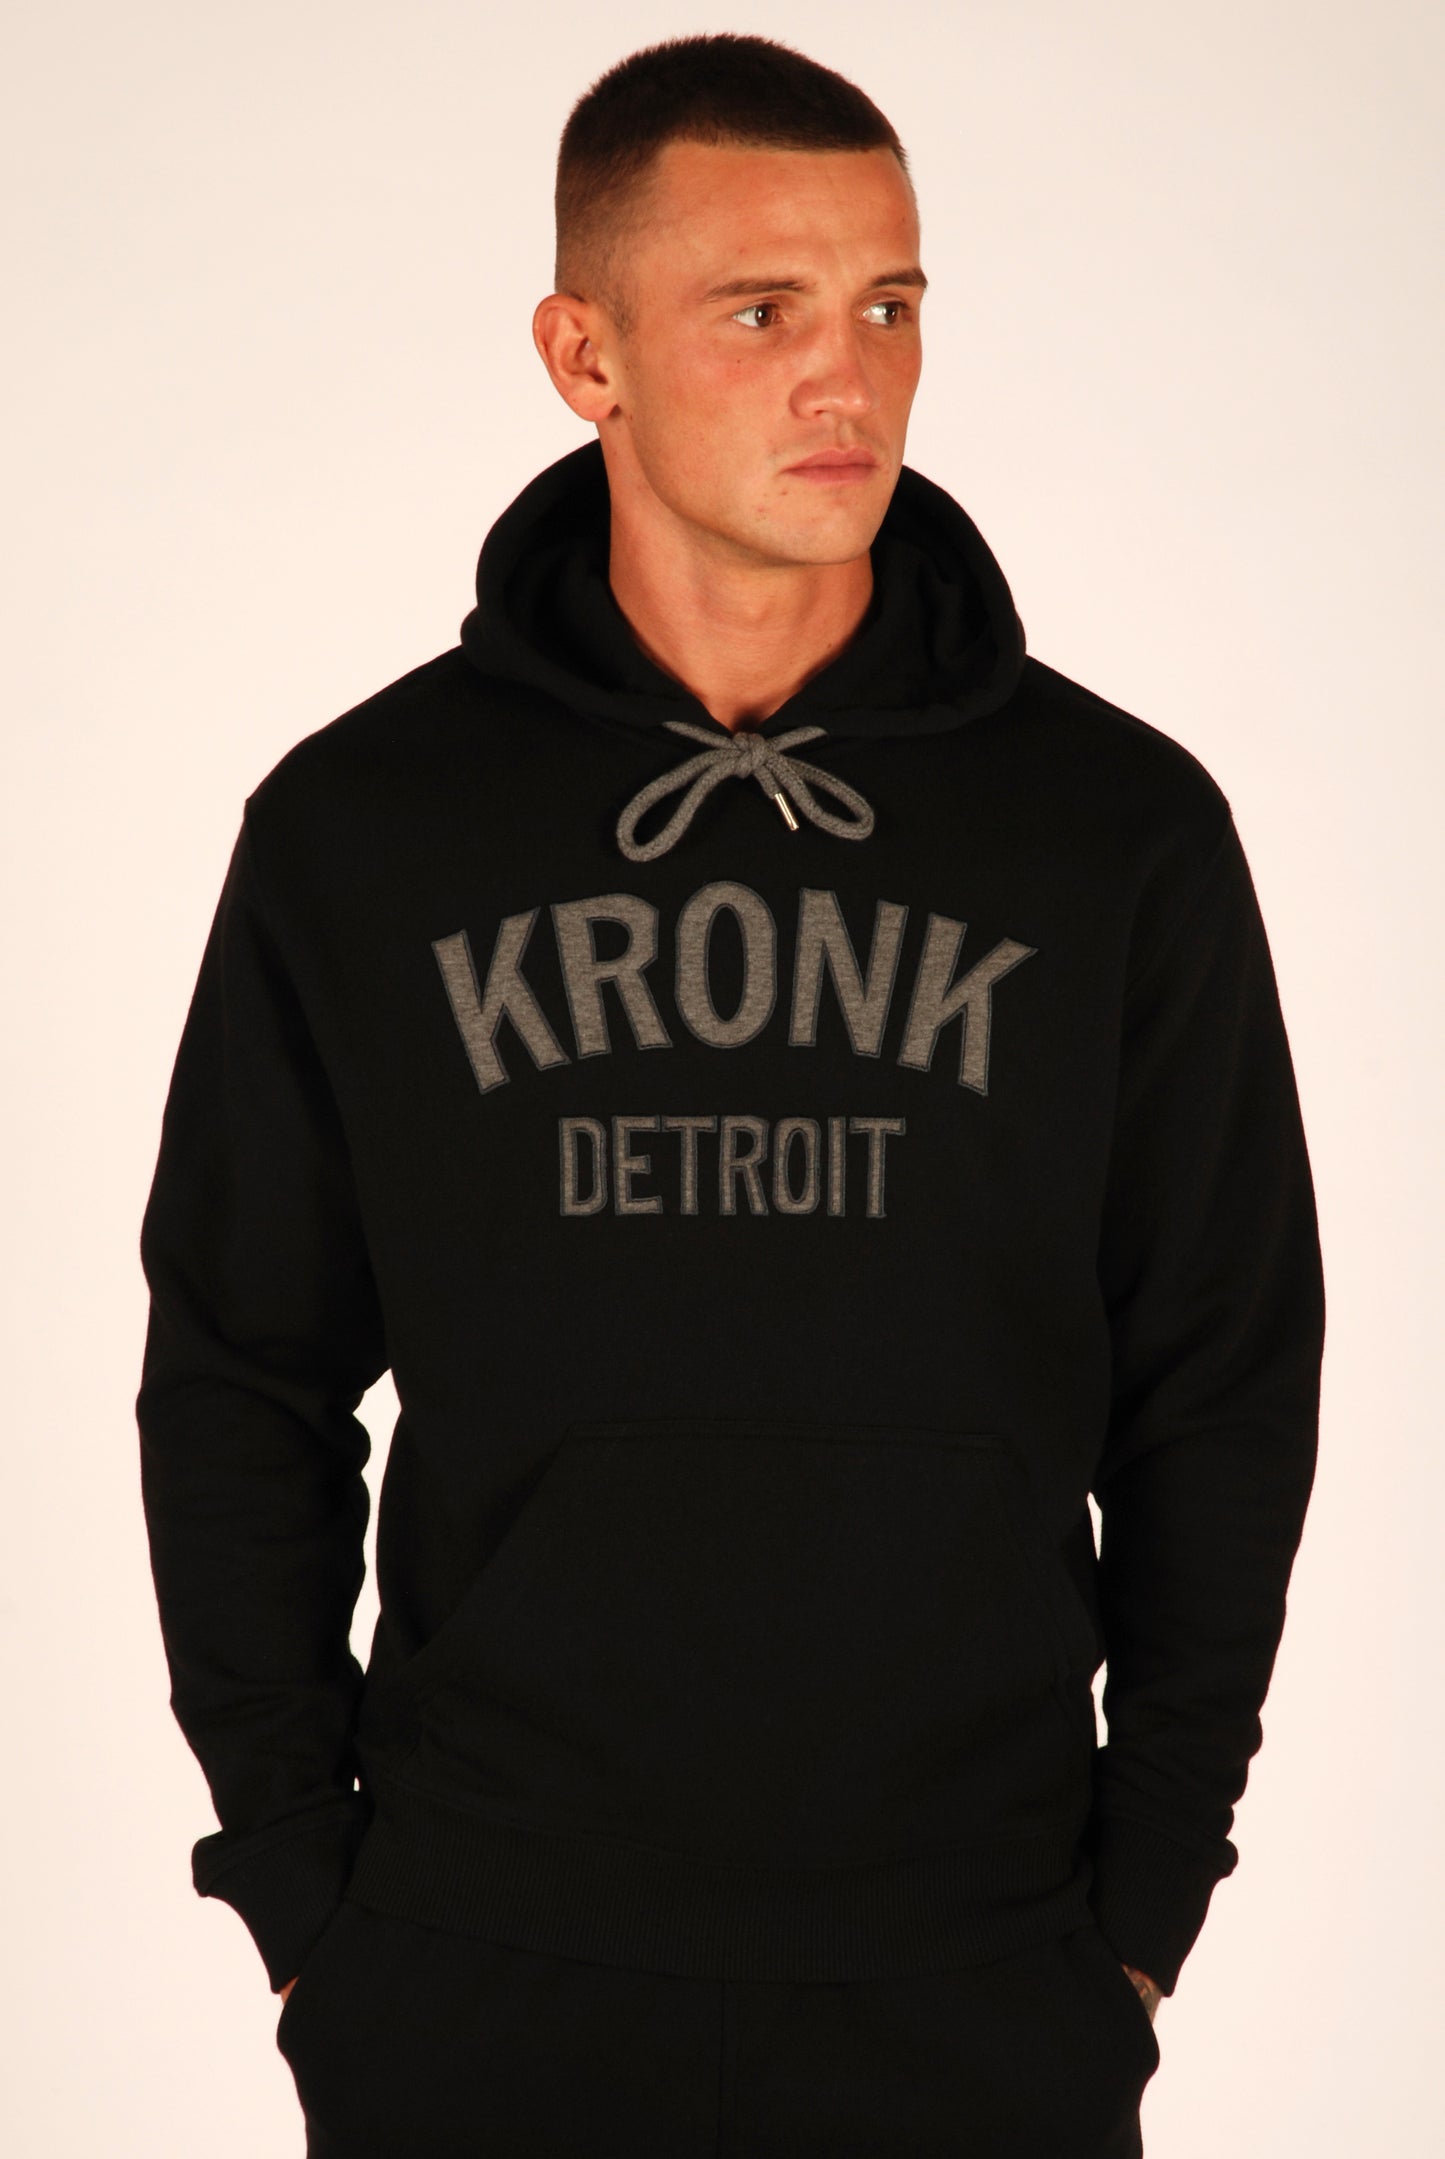 KRONK Detroit Applique Hoodie Regular Fit Black with Charcoal logo